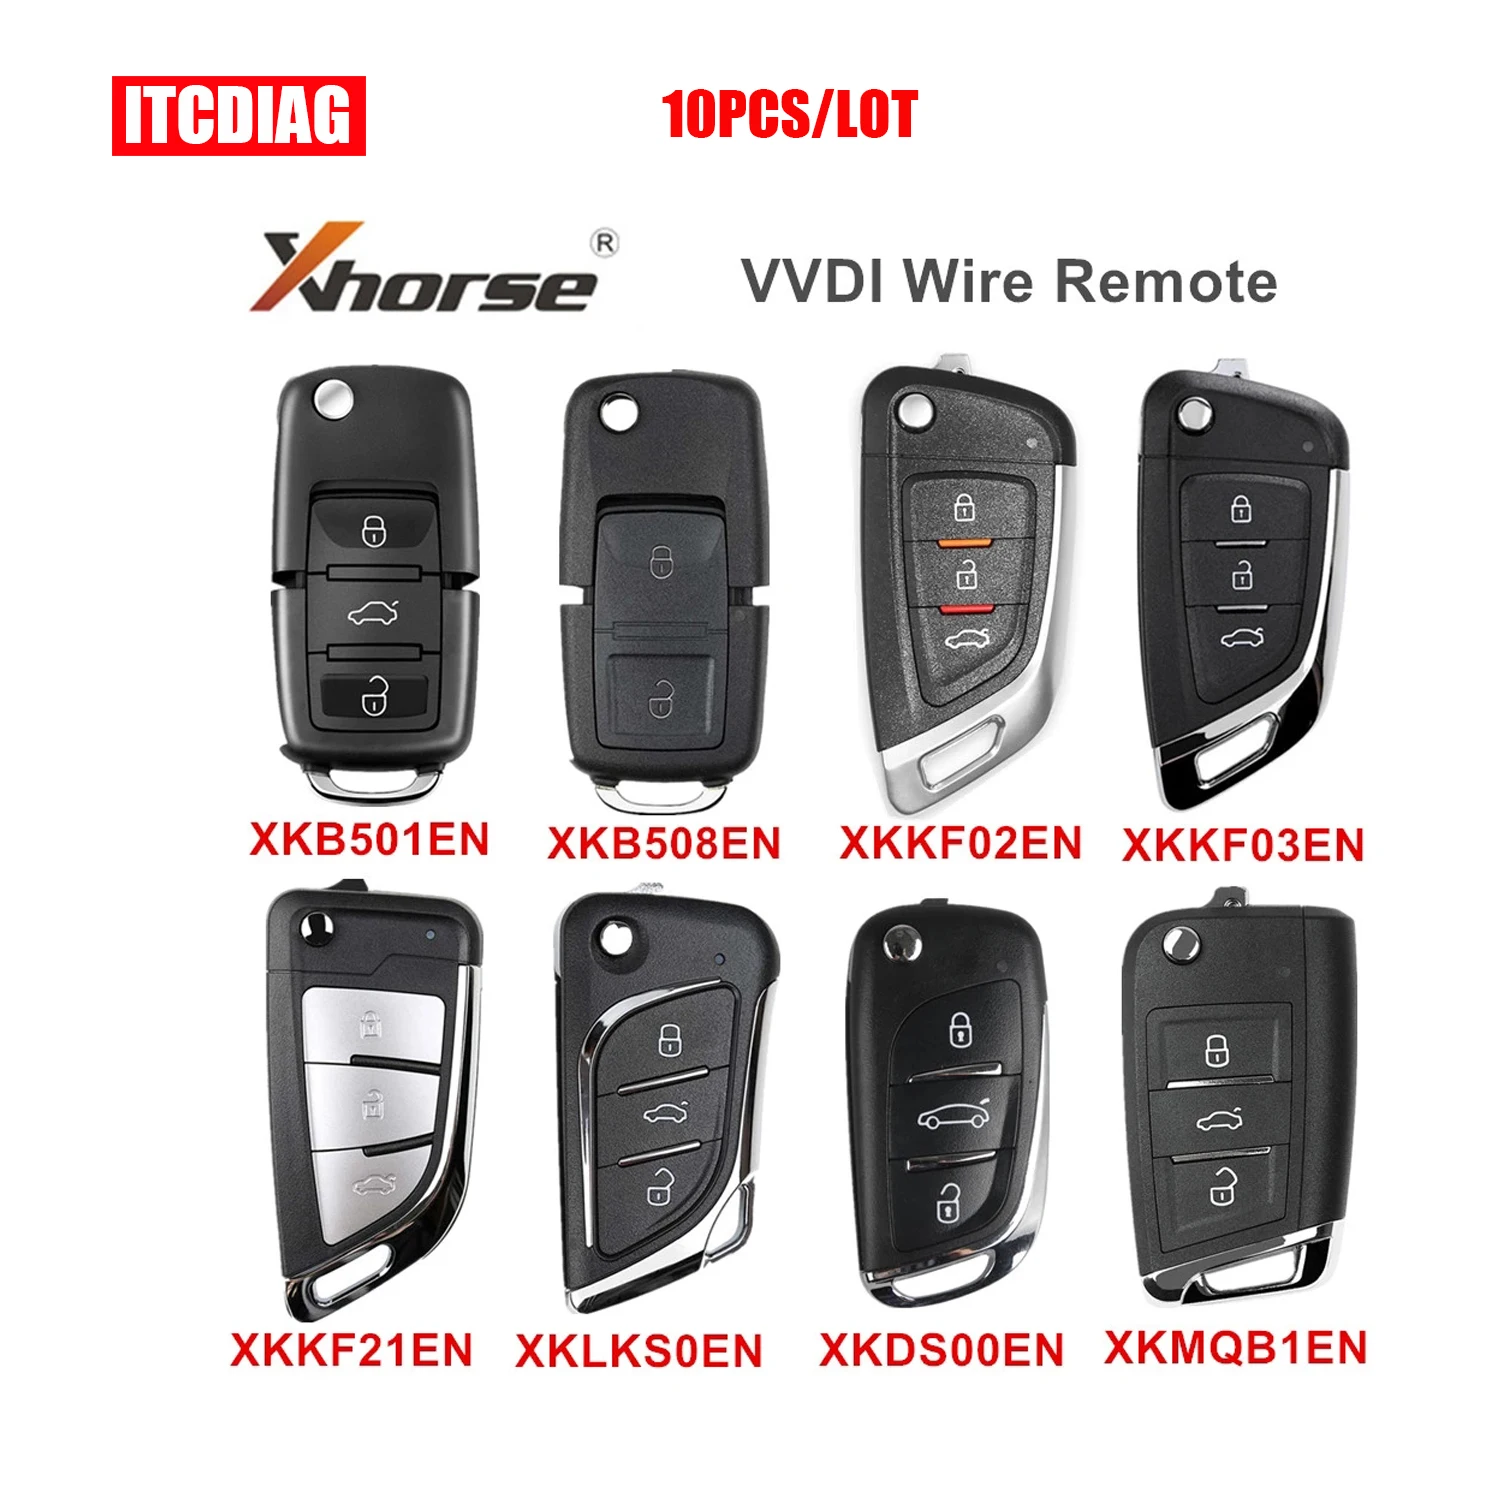 

10pcs/lot Xhorse VVDI Wire Remote Control Car Key XKB501EN XKB508EN XKKF02EN XKKF03EN XKKF21EN for VVDI Mini key Tool Max VVDI2